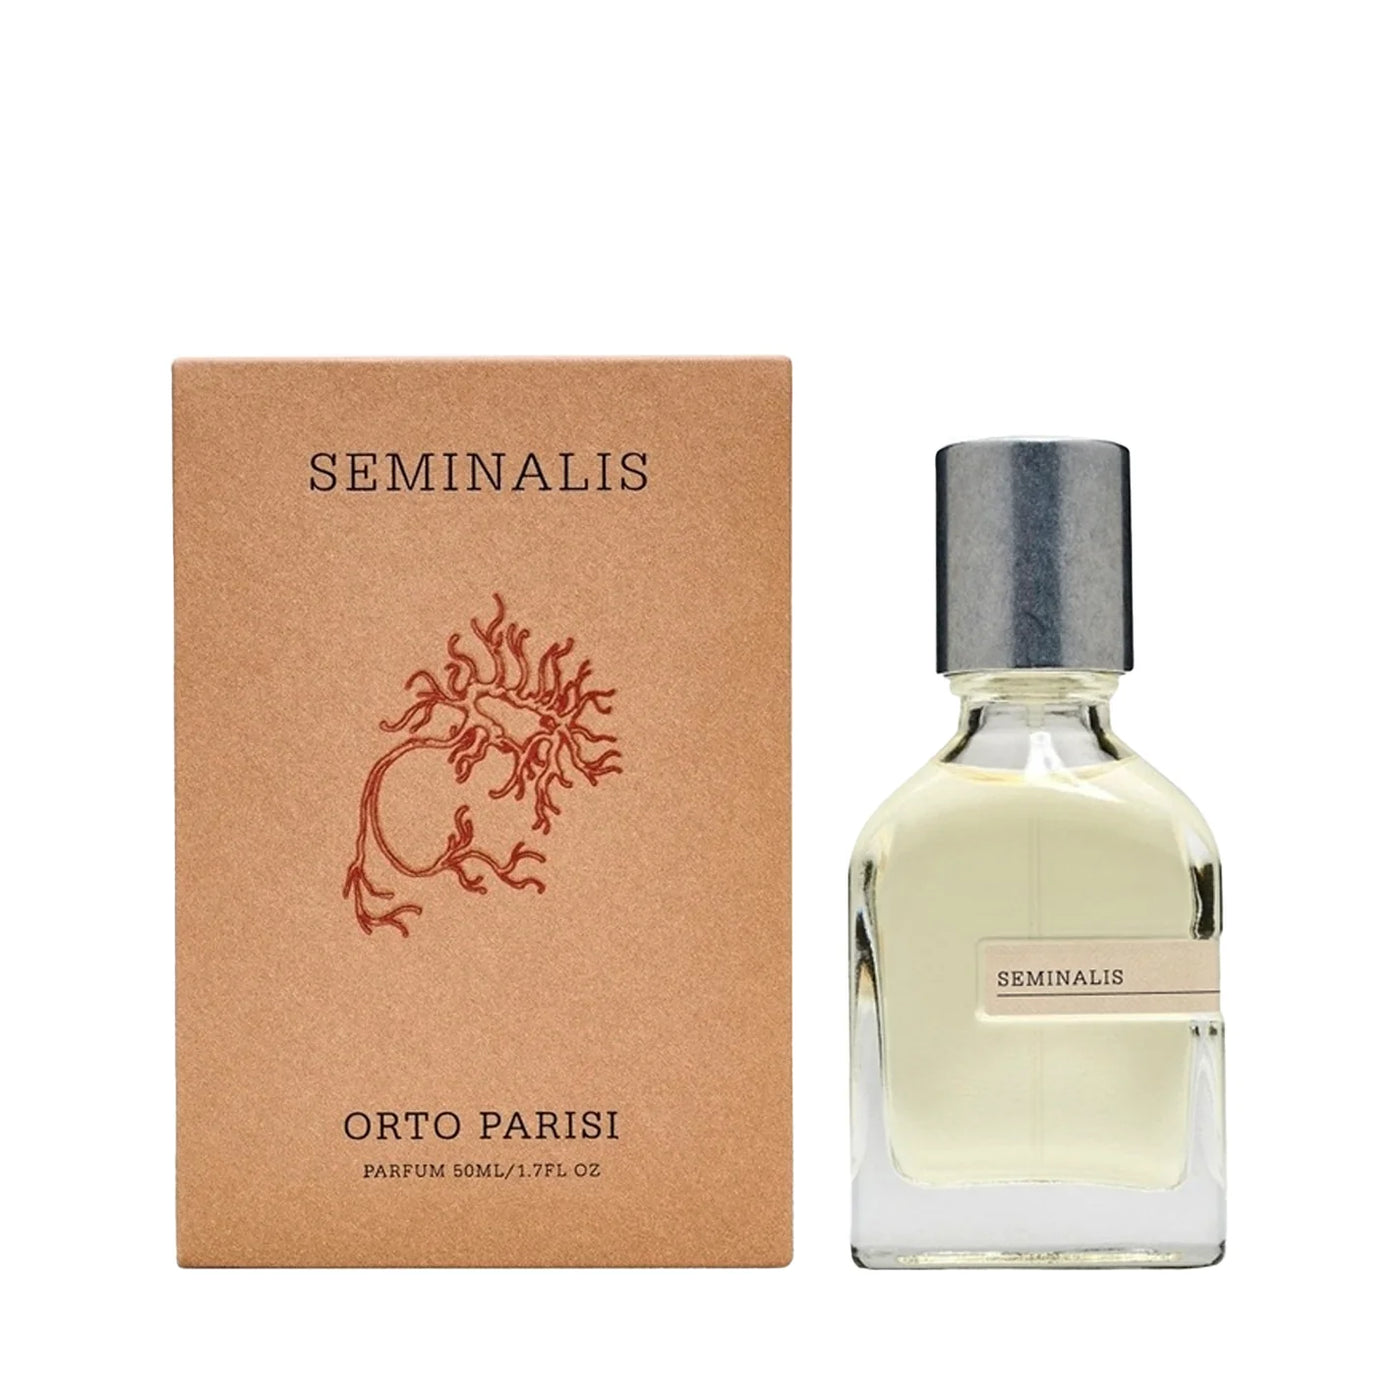 Orto Parisi Seminalis Perfume